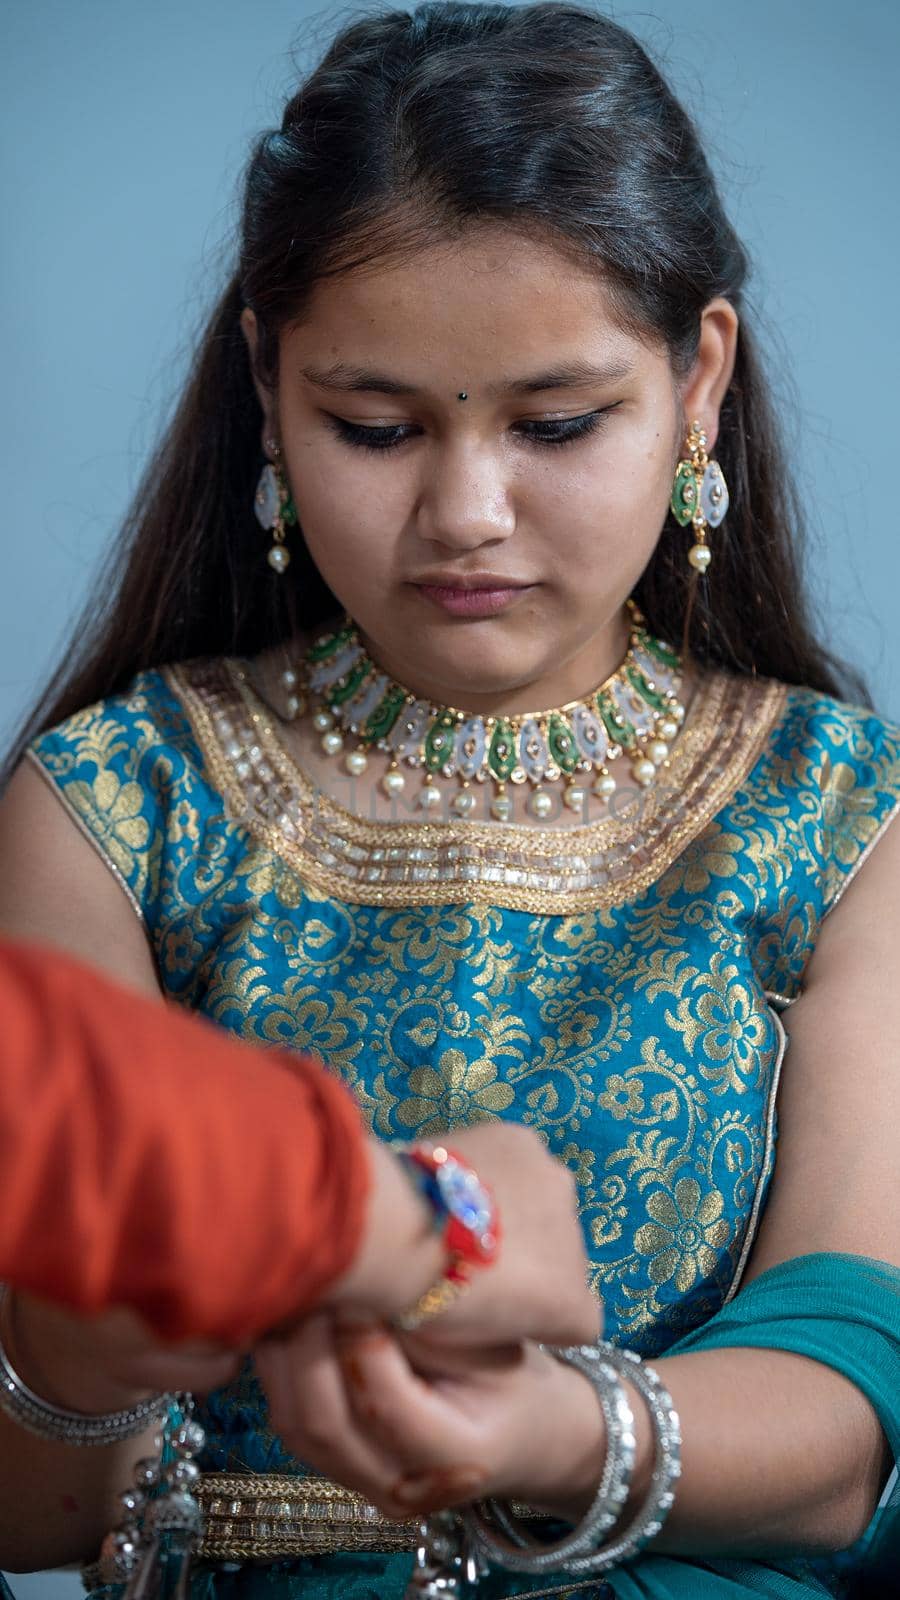 Sister tying the rakhi, Raksha Bandhan to brother's wrist during festival. by stocksvids